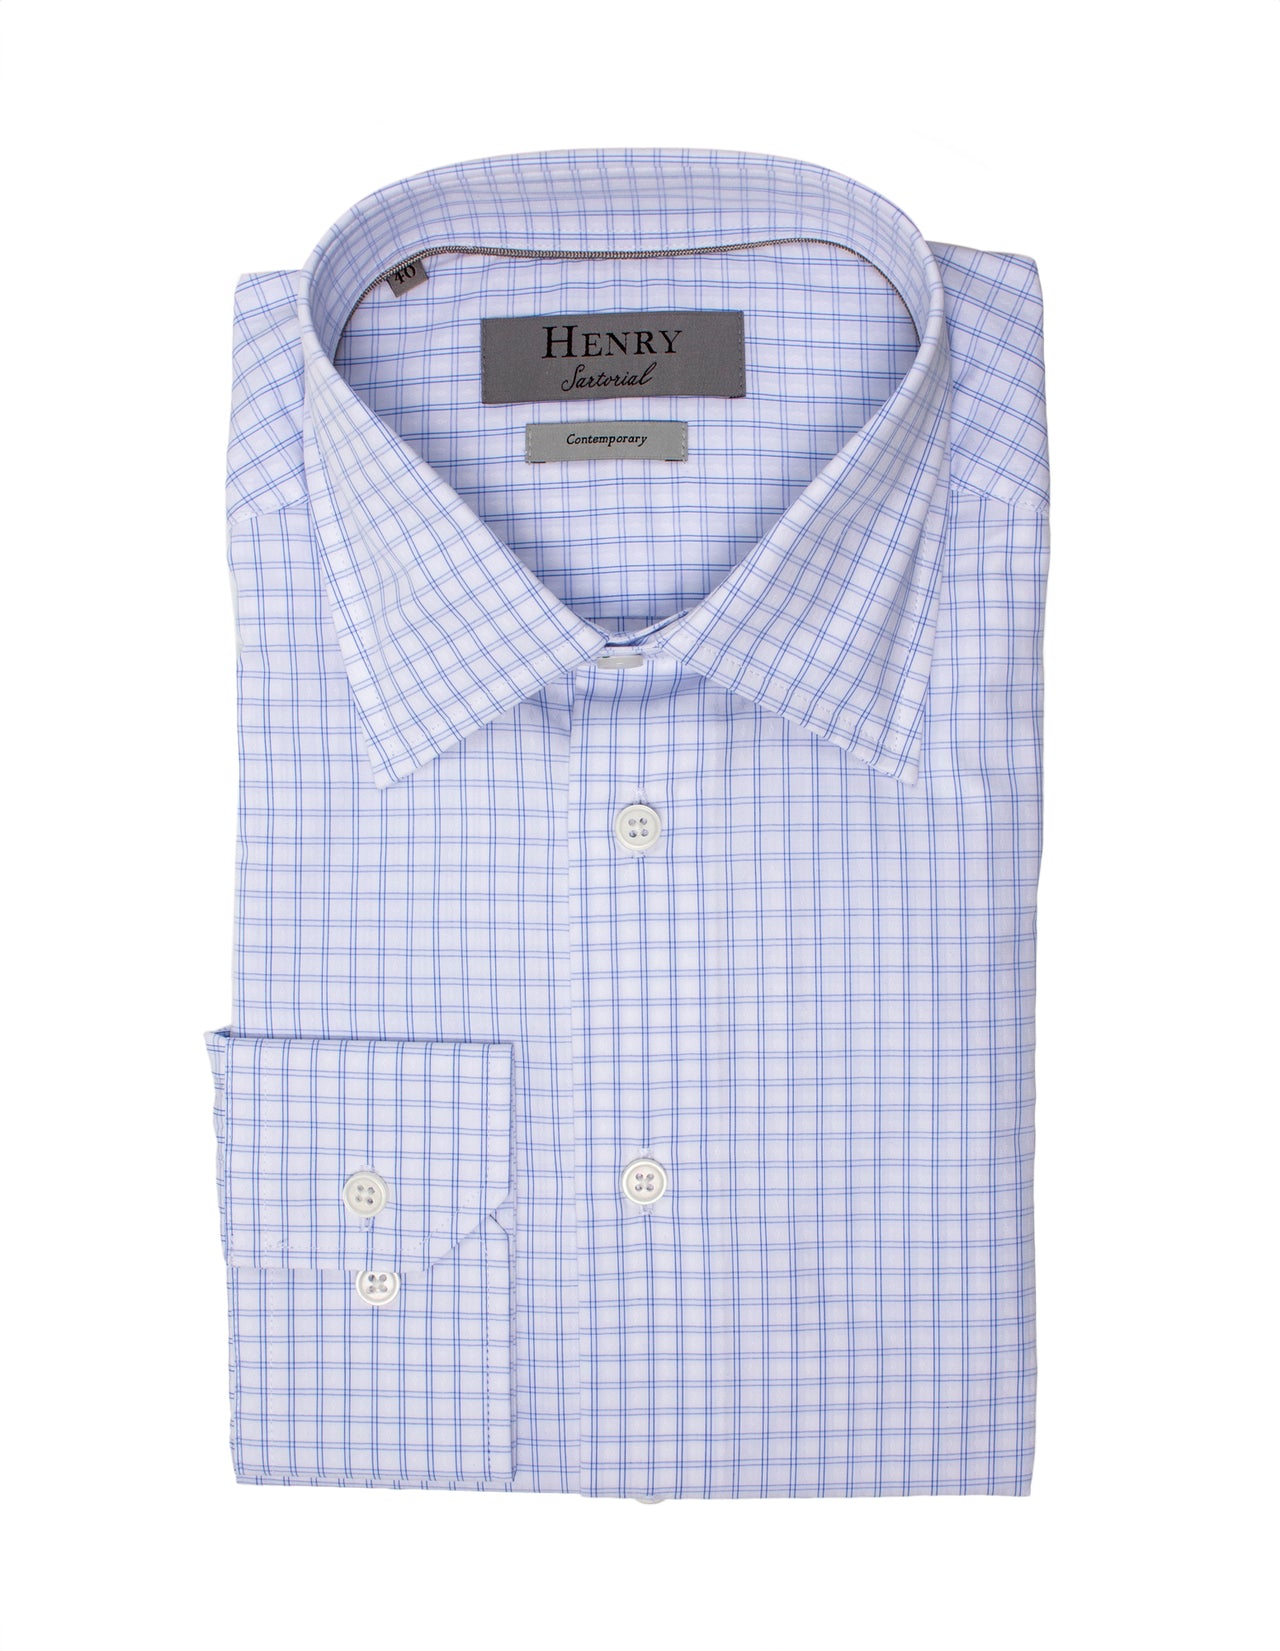 HENRY SARTORIAL Contemporary Fit Check Shirt BLUE/WHITE